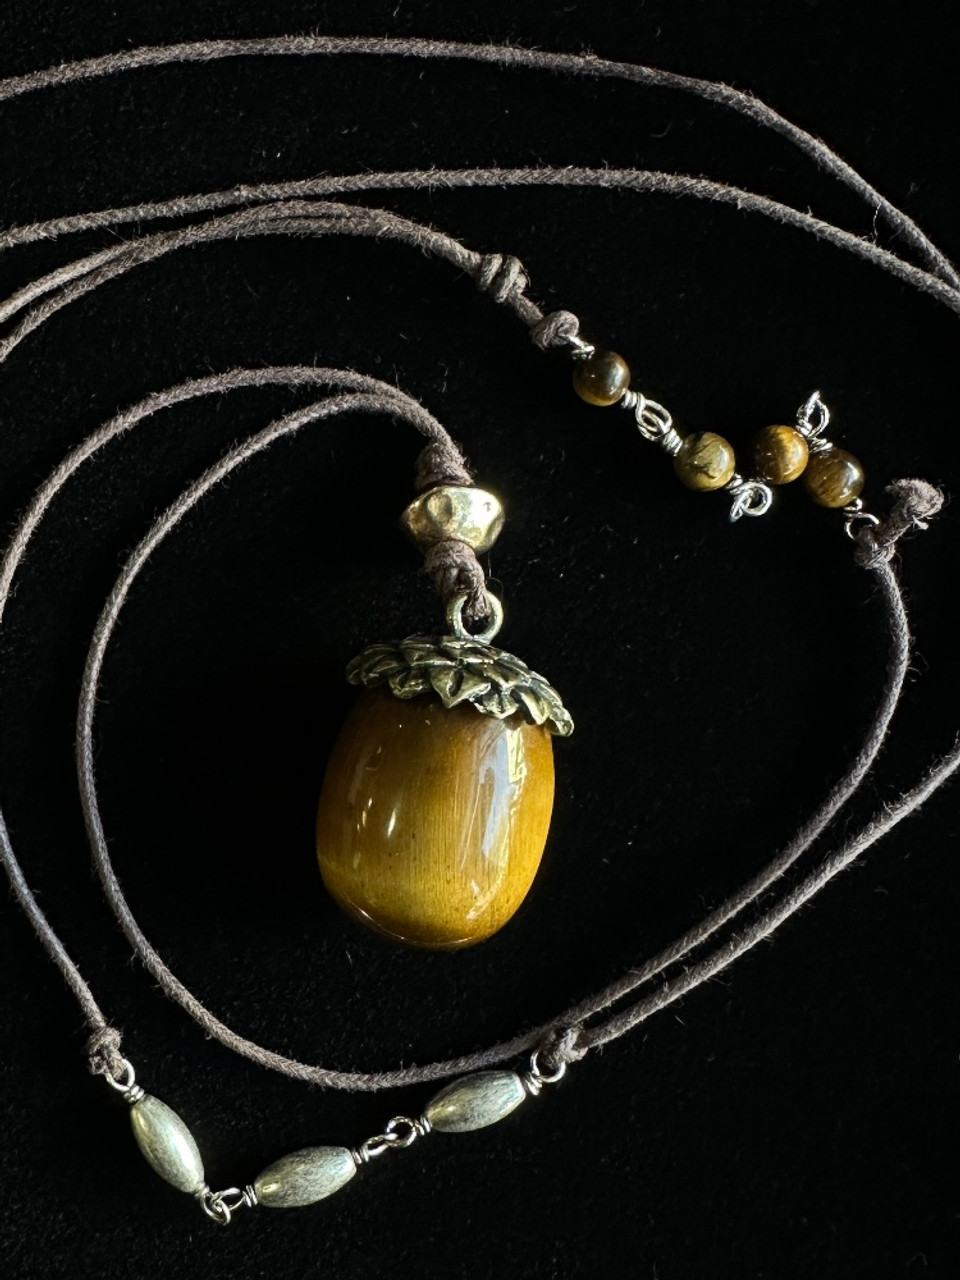 Lola Rose Semi Precious Stones Necklace and Bracelet #1 | eBay